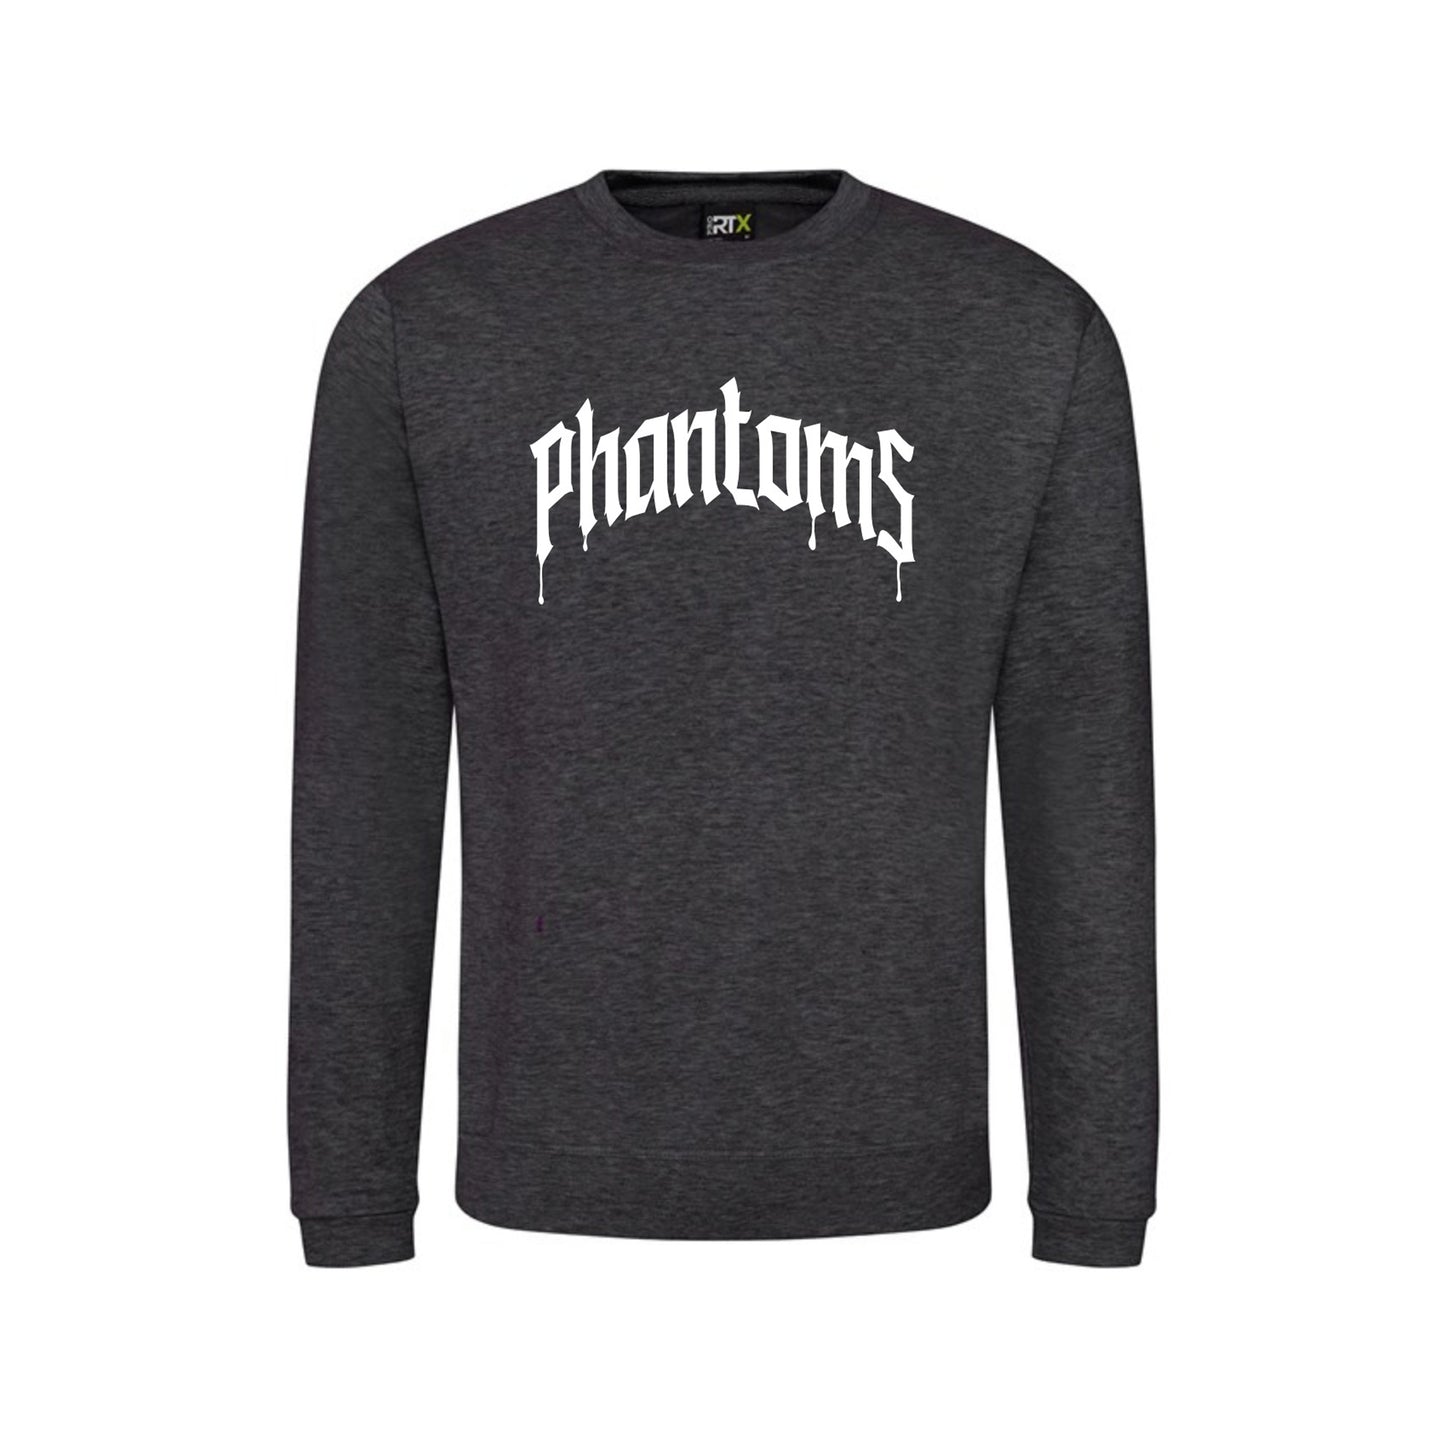 Phantoms Sweatshirt